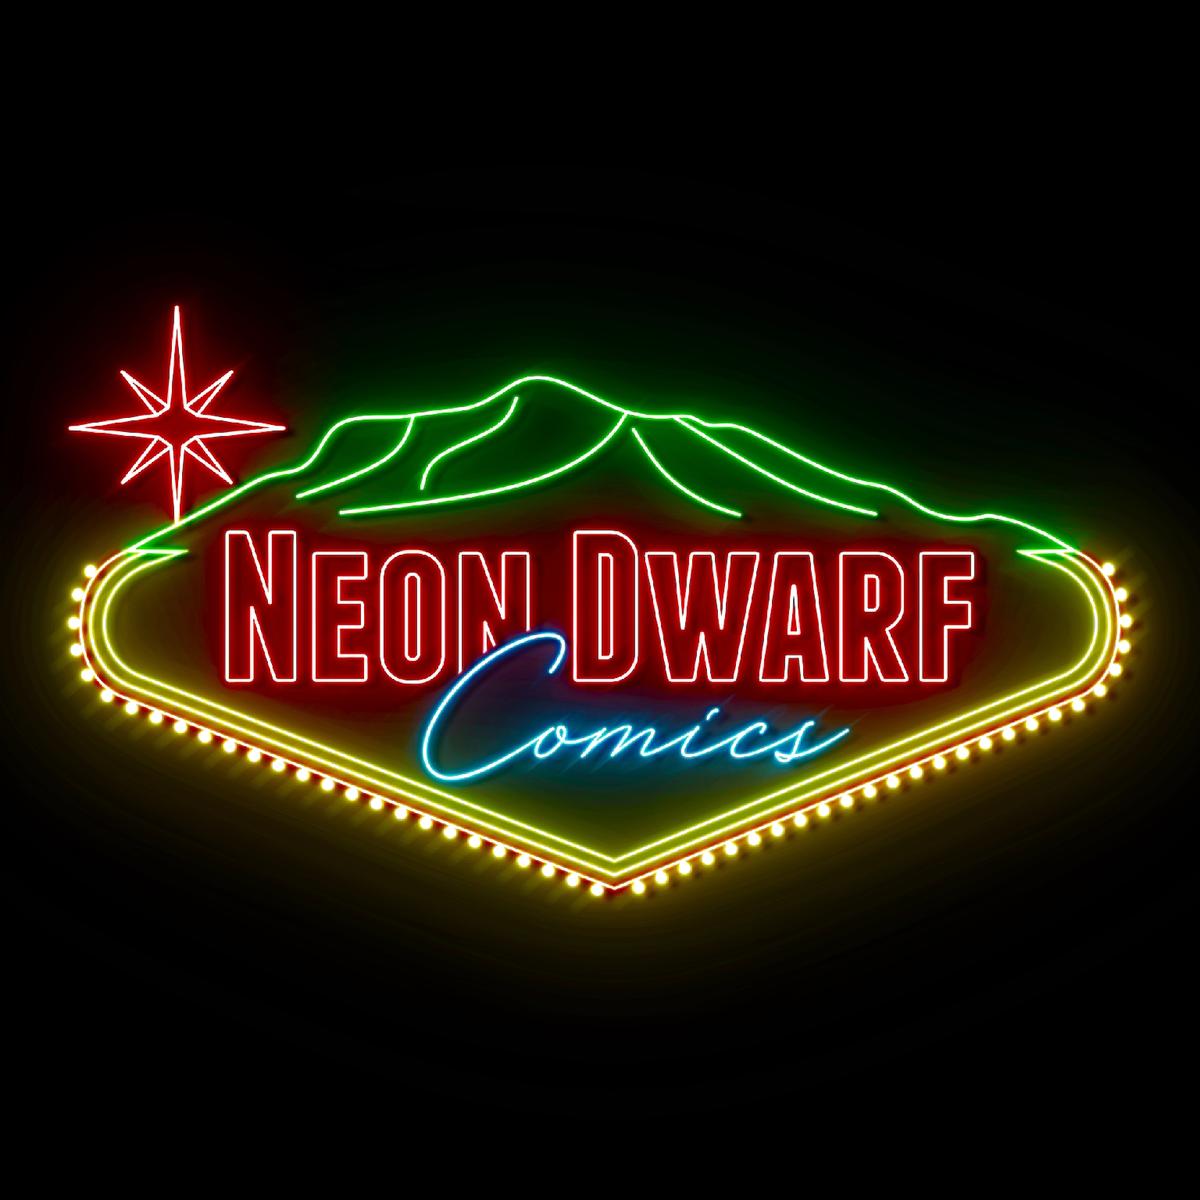 Neondwarfcomics's images